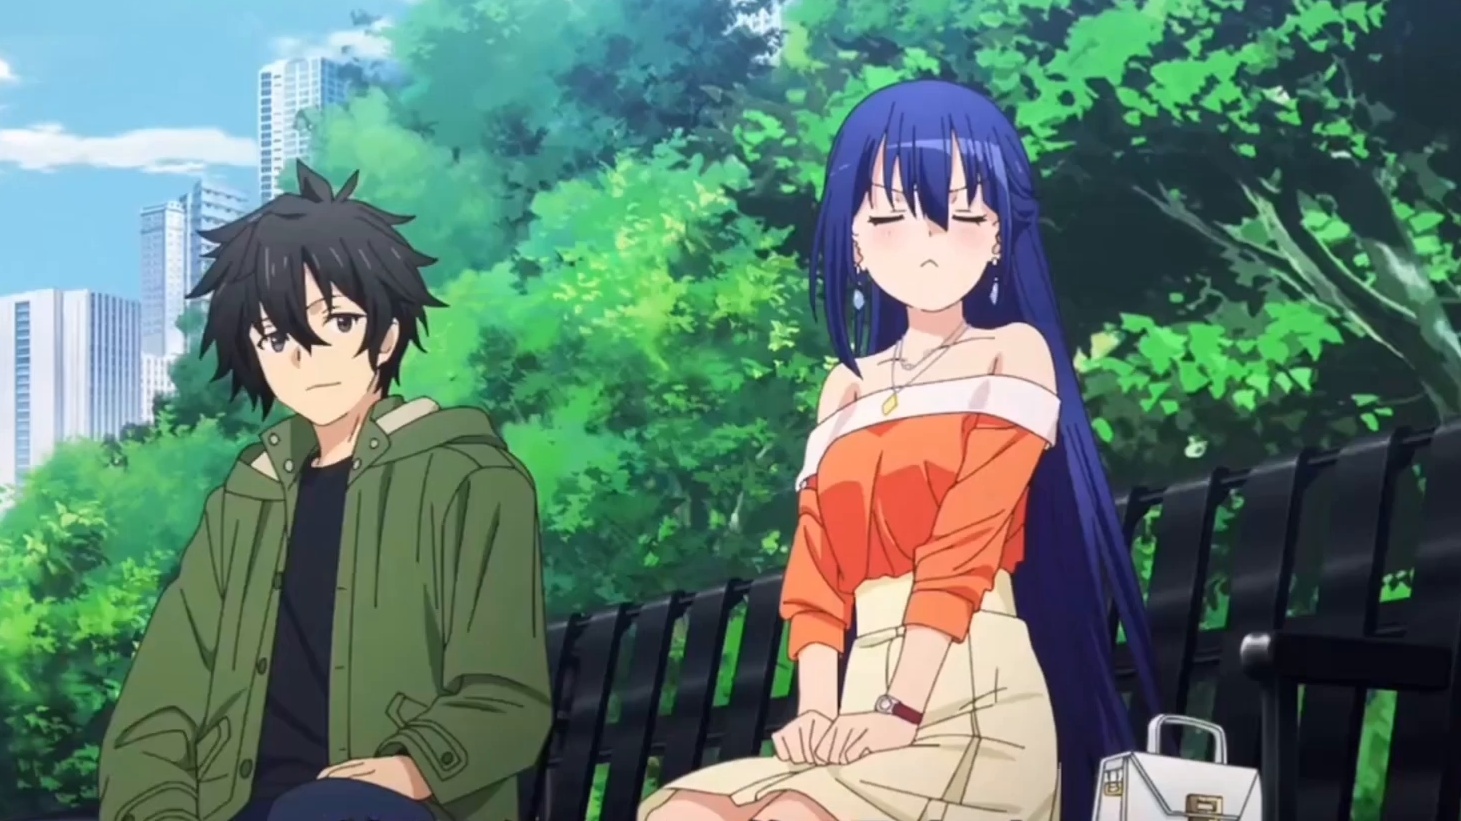 Jealous Harem Anime Moments  Flirting With Another Girl Be Like  Bilibili